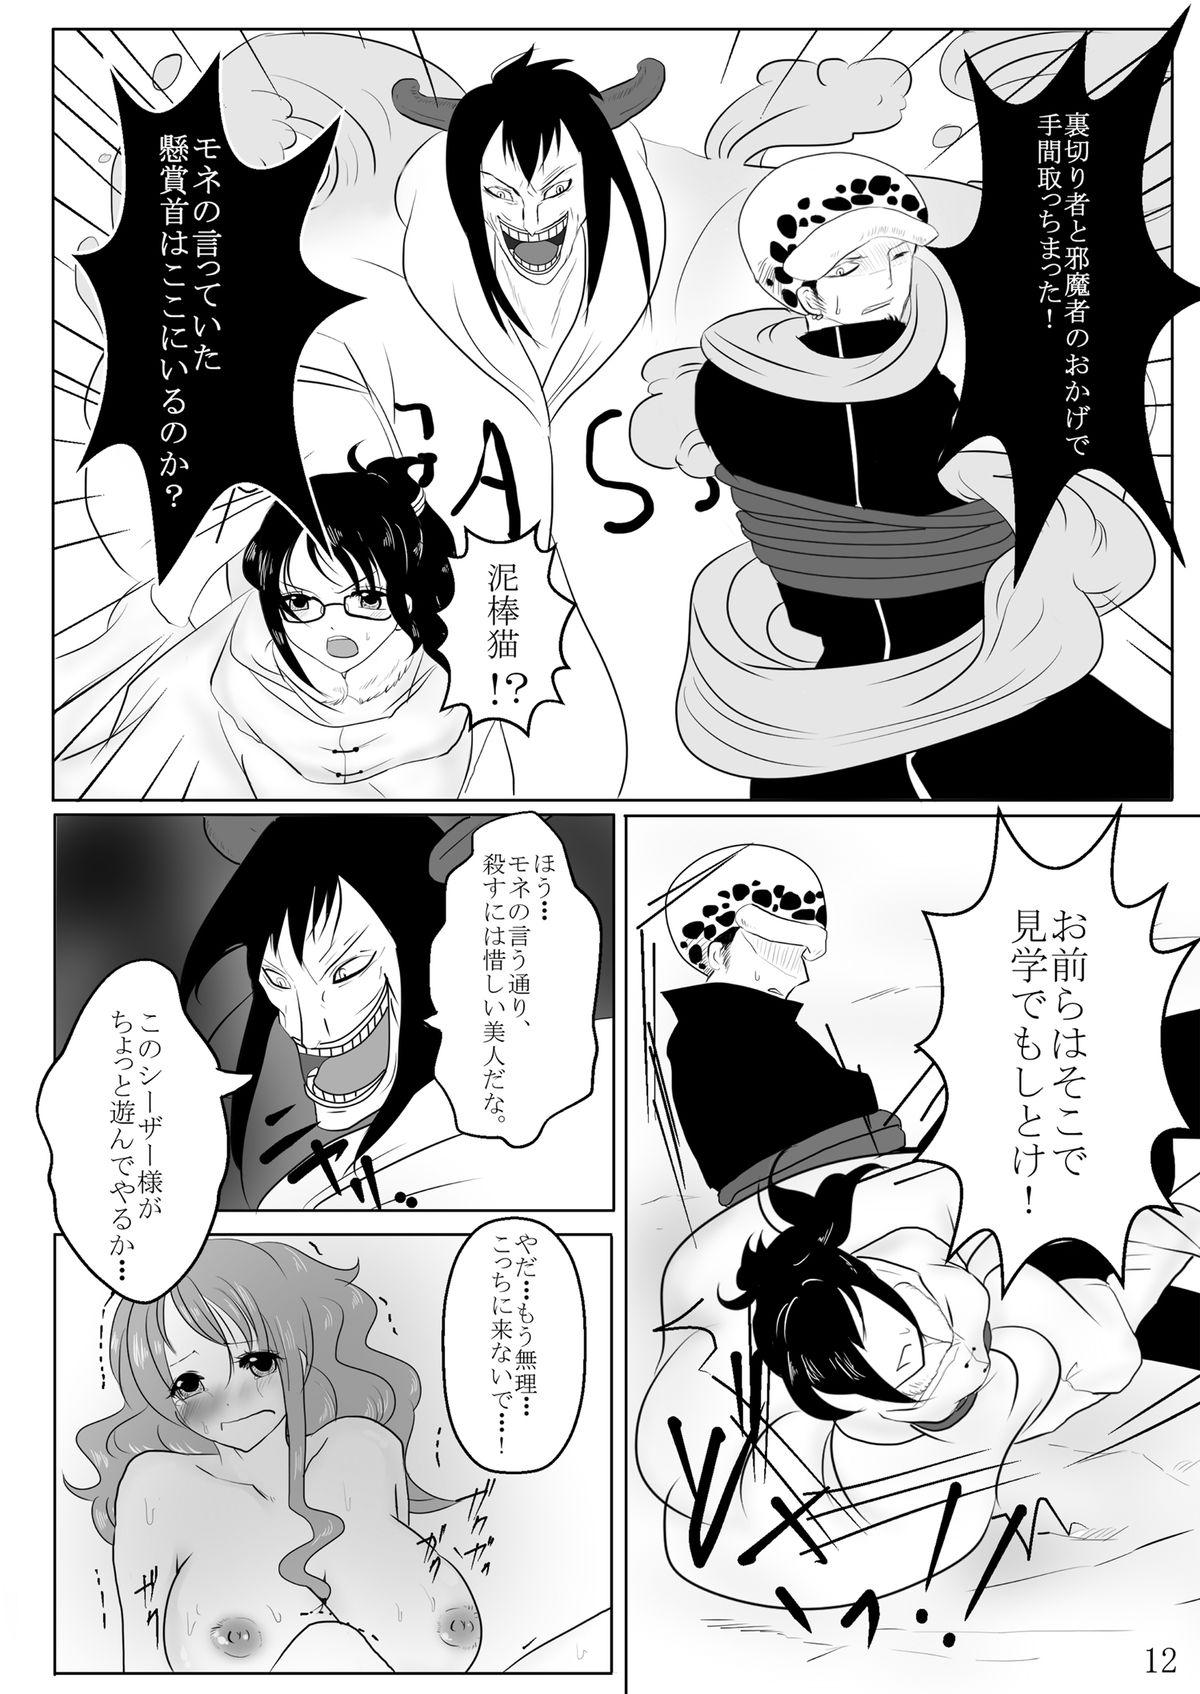 [Pint Size (TKS, Kitoha) Jump Tales 11 - Namigeki! Uber Belly Blowout Hazard (One Piece) 11